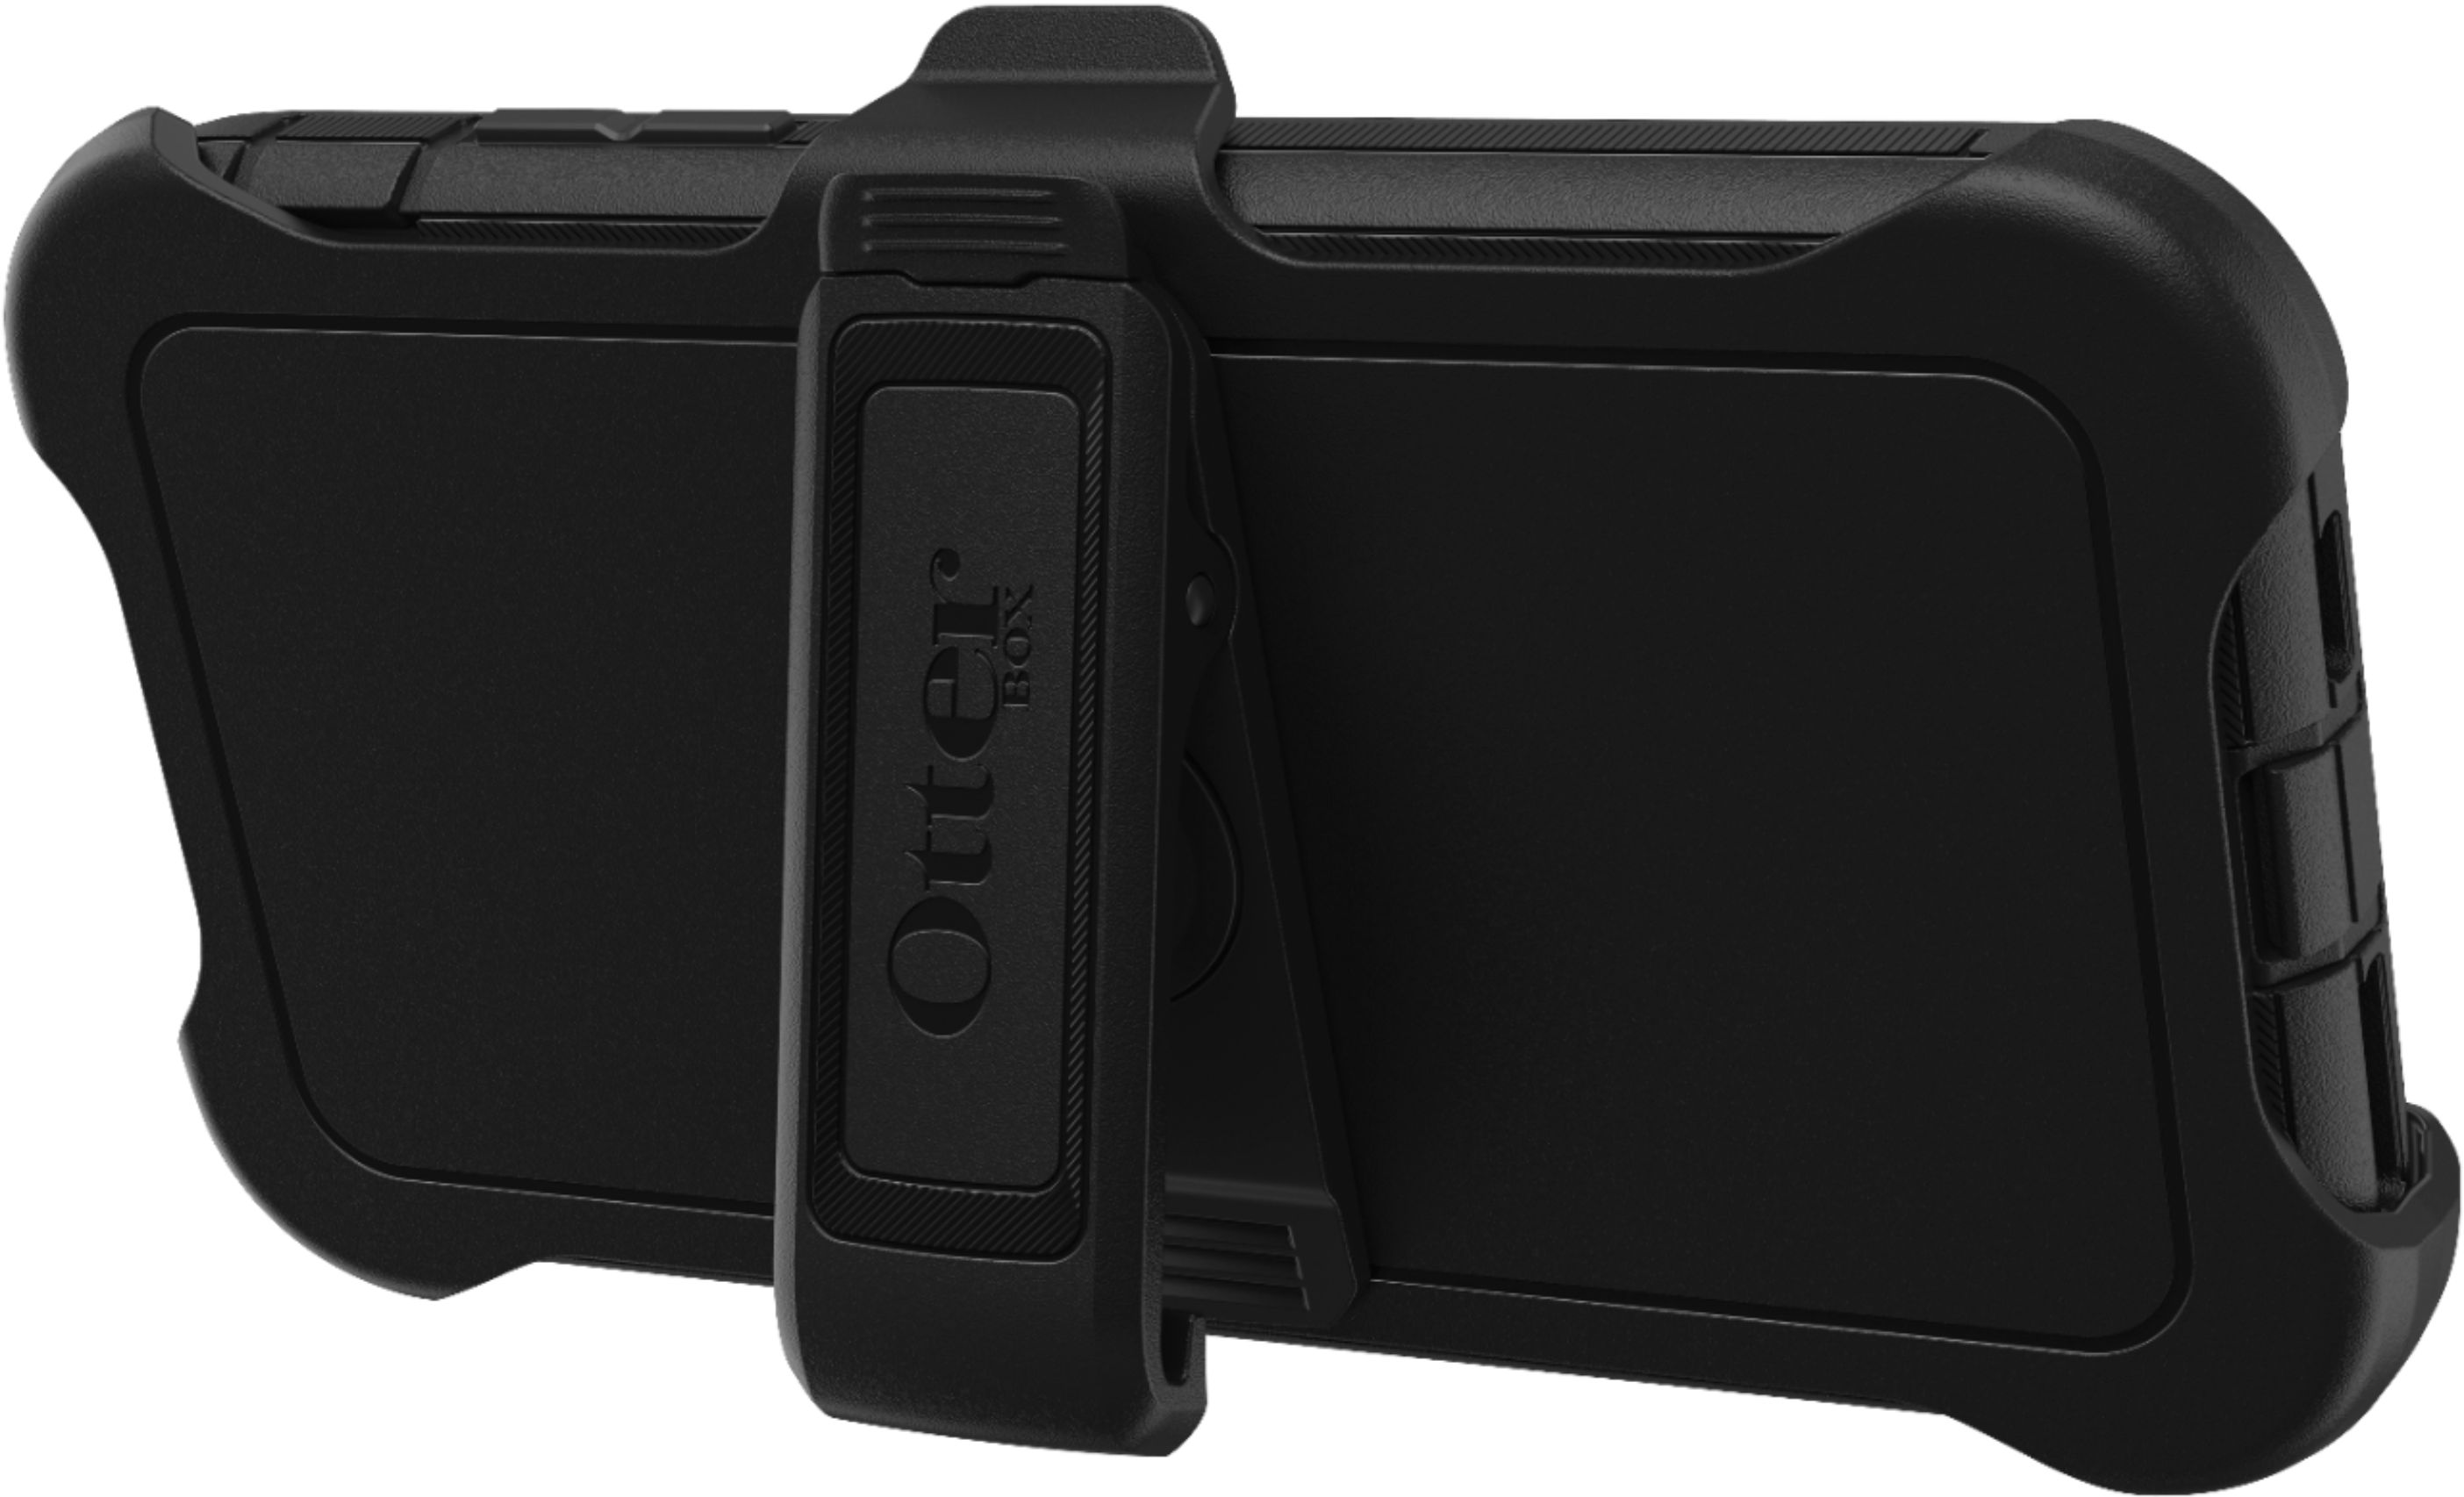 Otterbox Defender Pro Series Case For Apple® Iphone® 11 Pro Maxxs Max